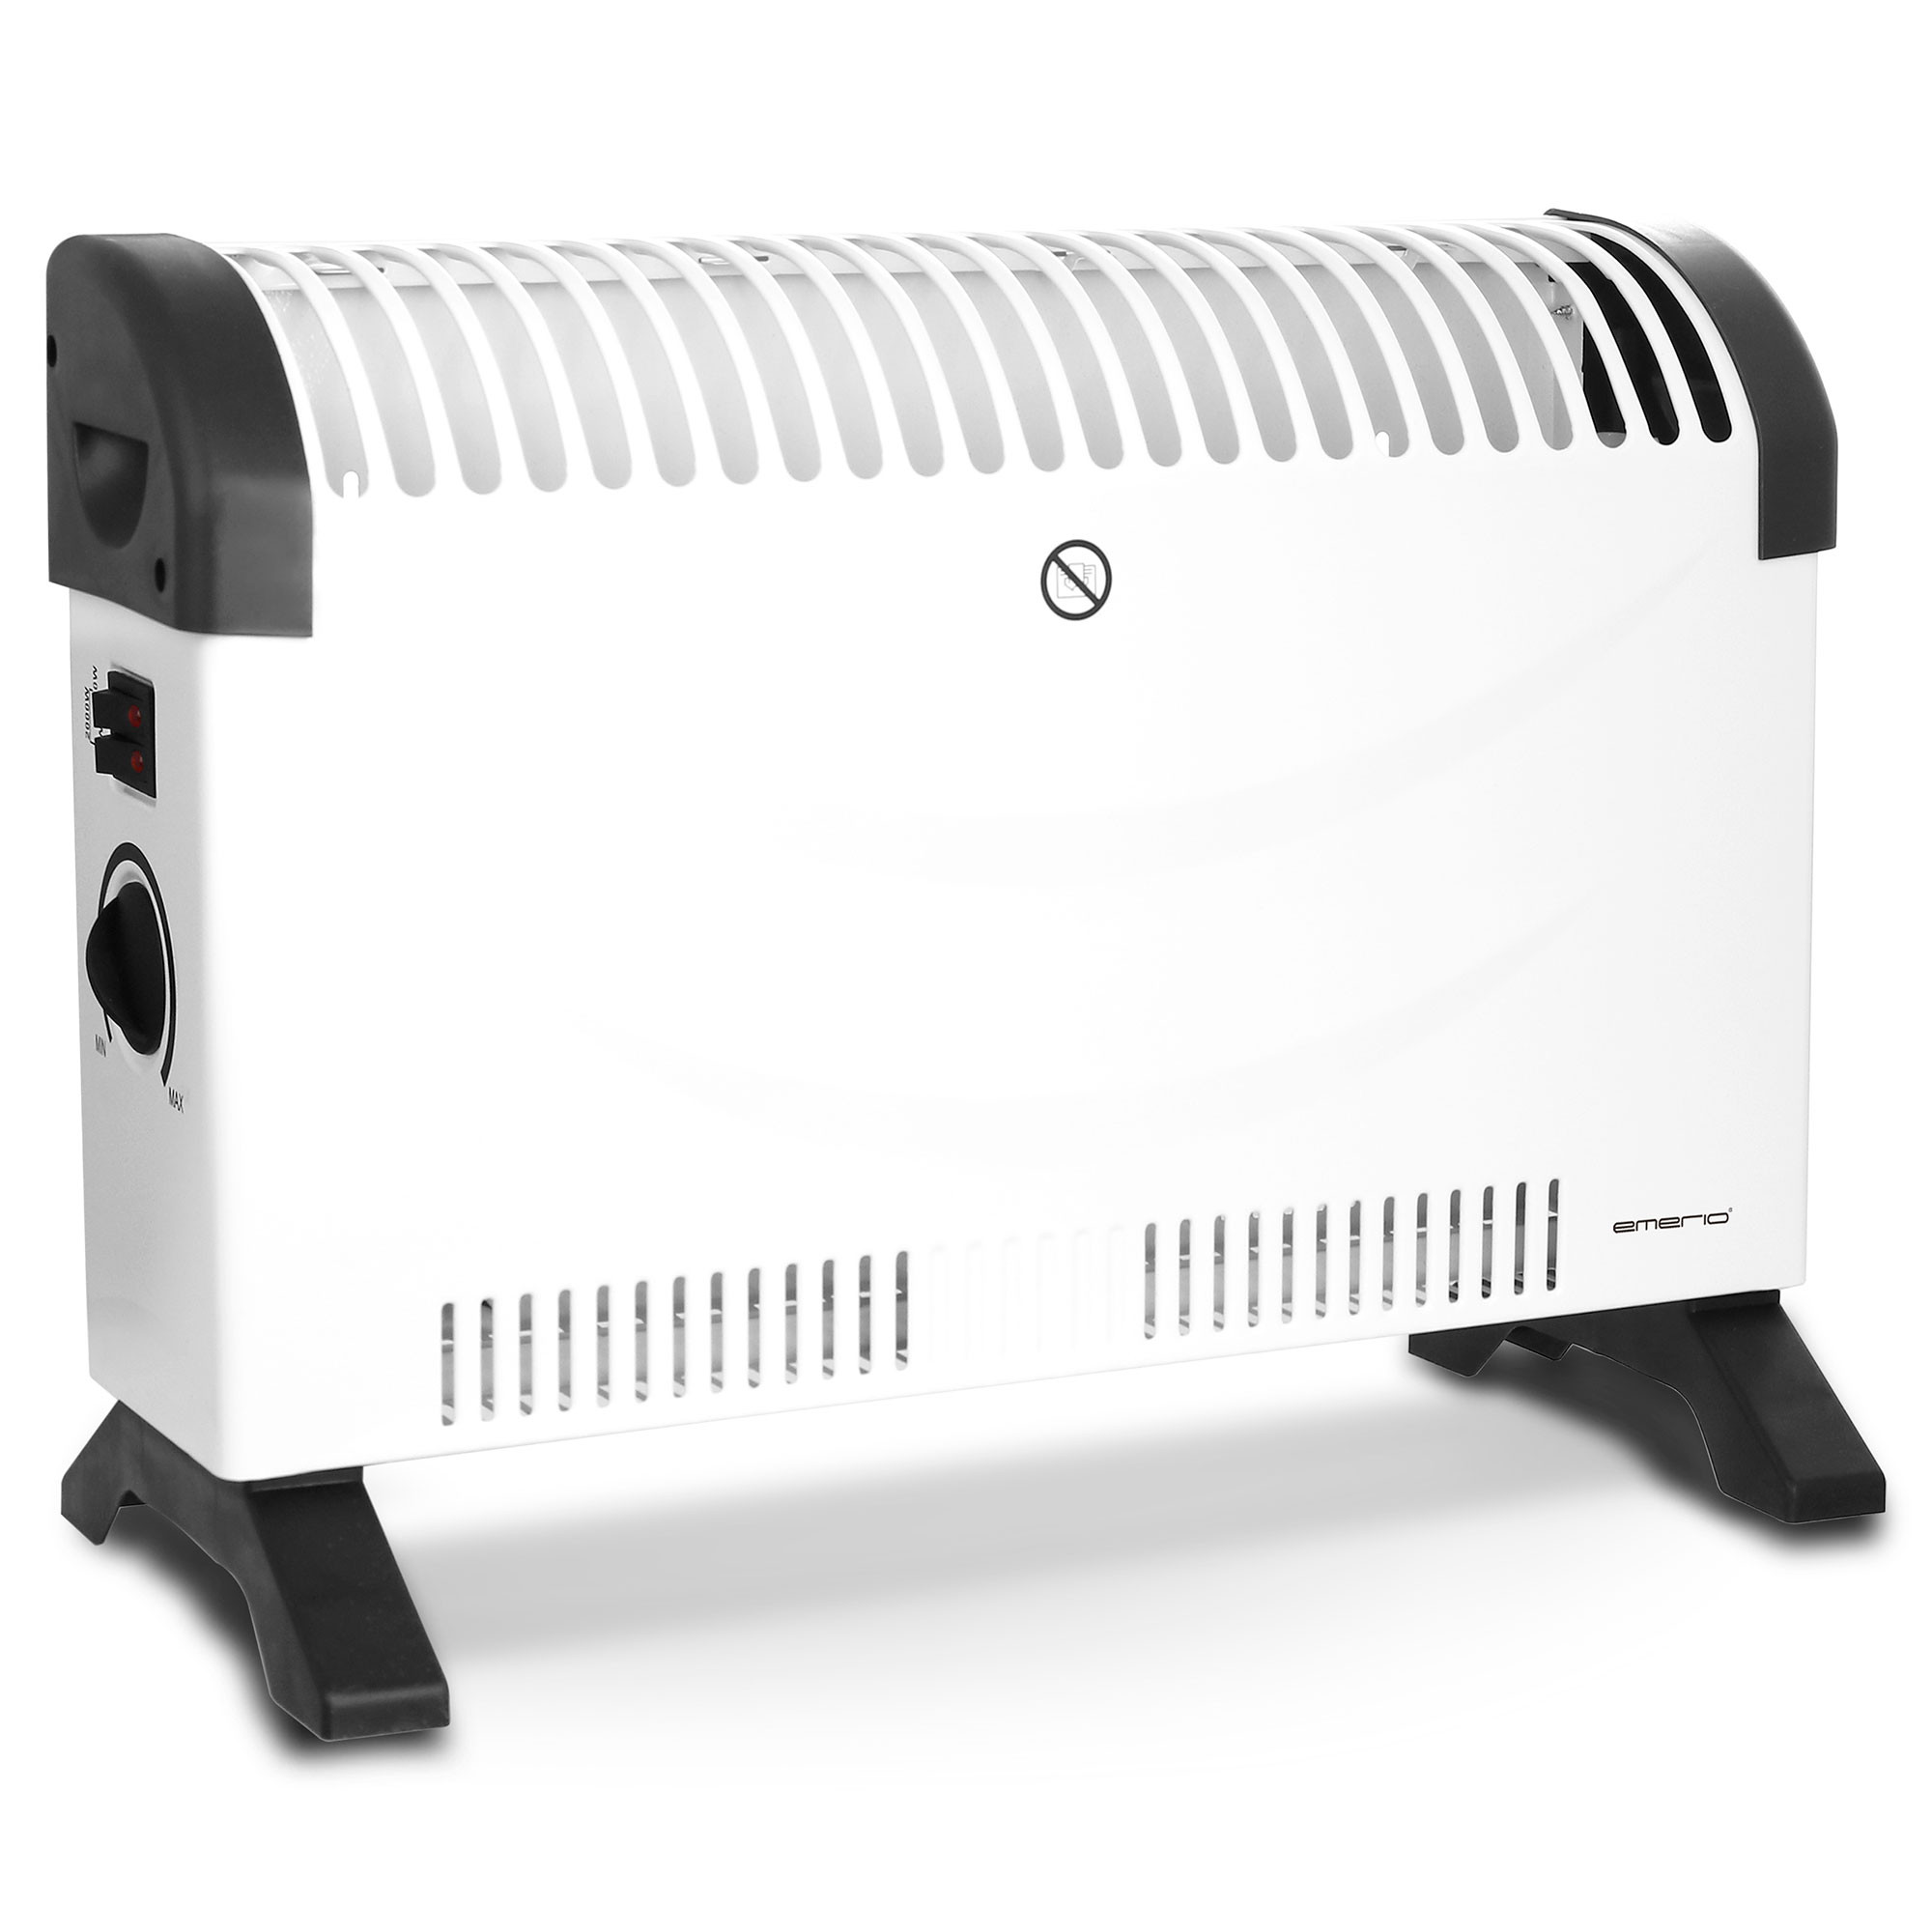 Radiador convector bajo consumo【Wifi】emisor térmico panel calefactor -  Brico Profesional